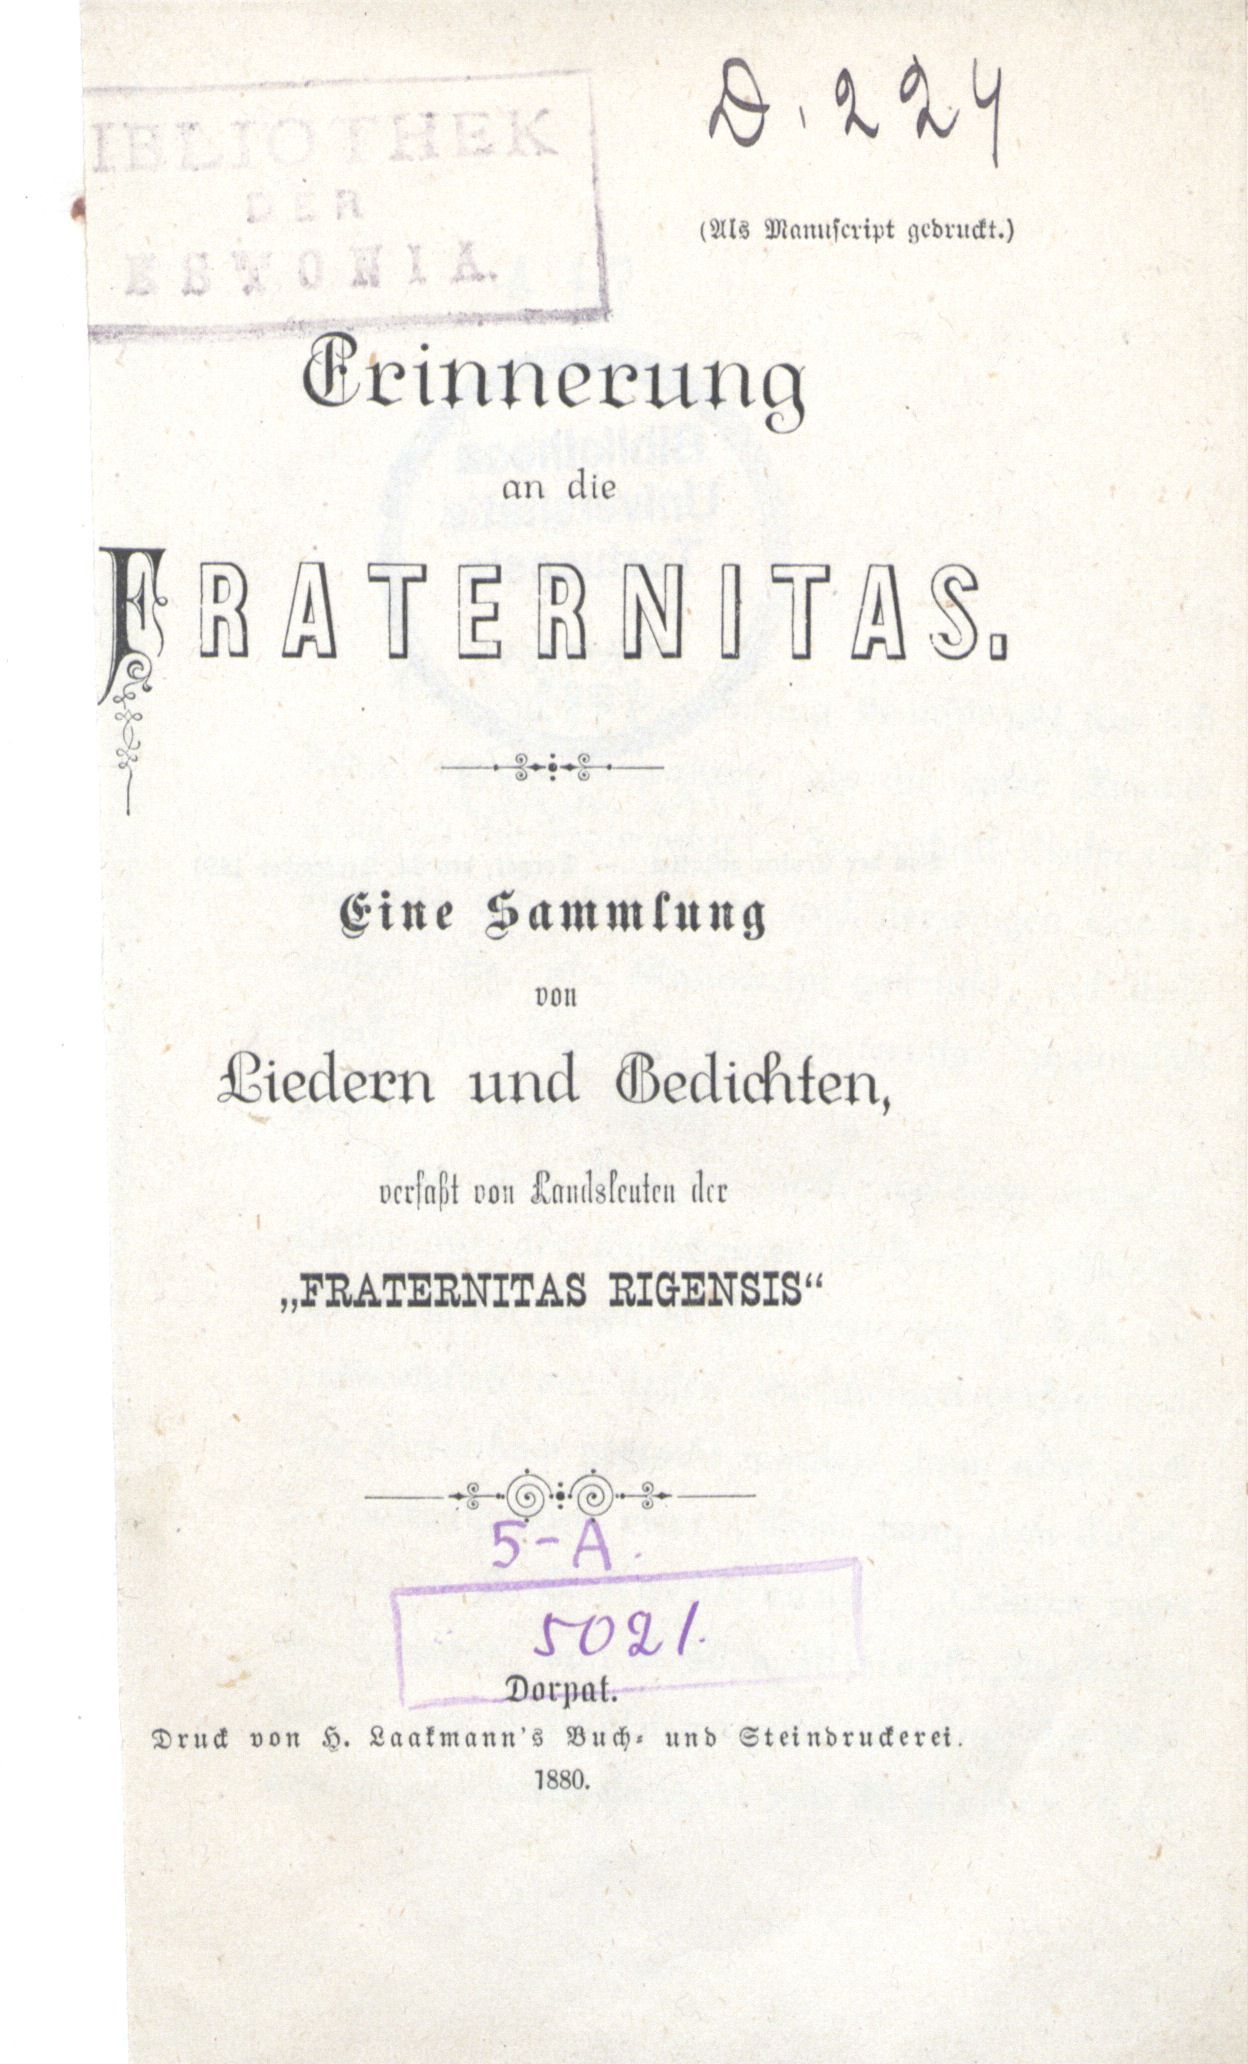 Erinnerung an die Fraternitas (1880) | 3. Titelblatt